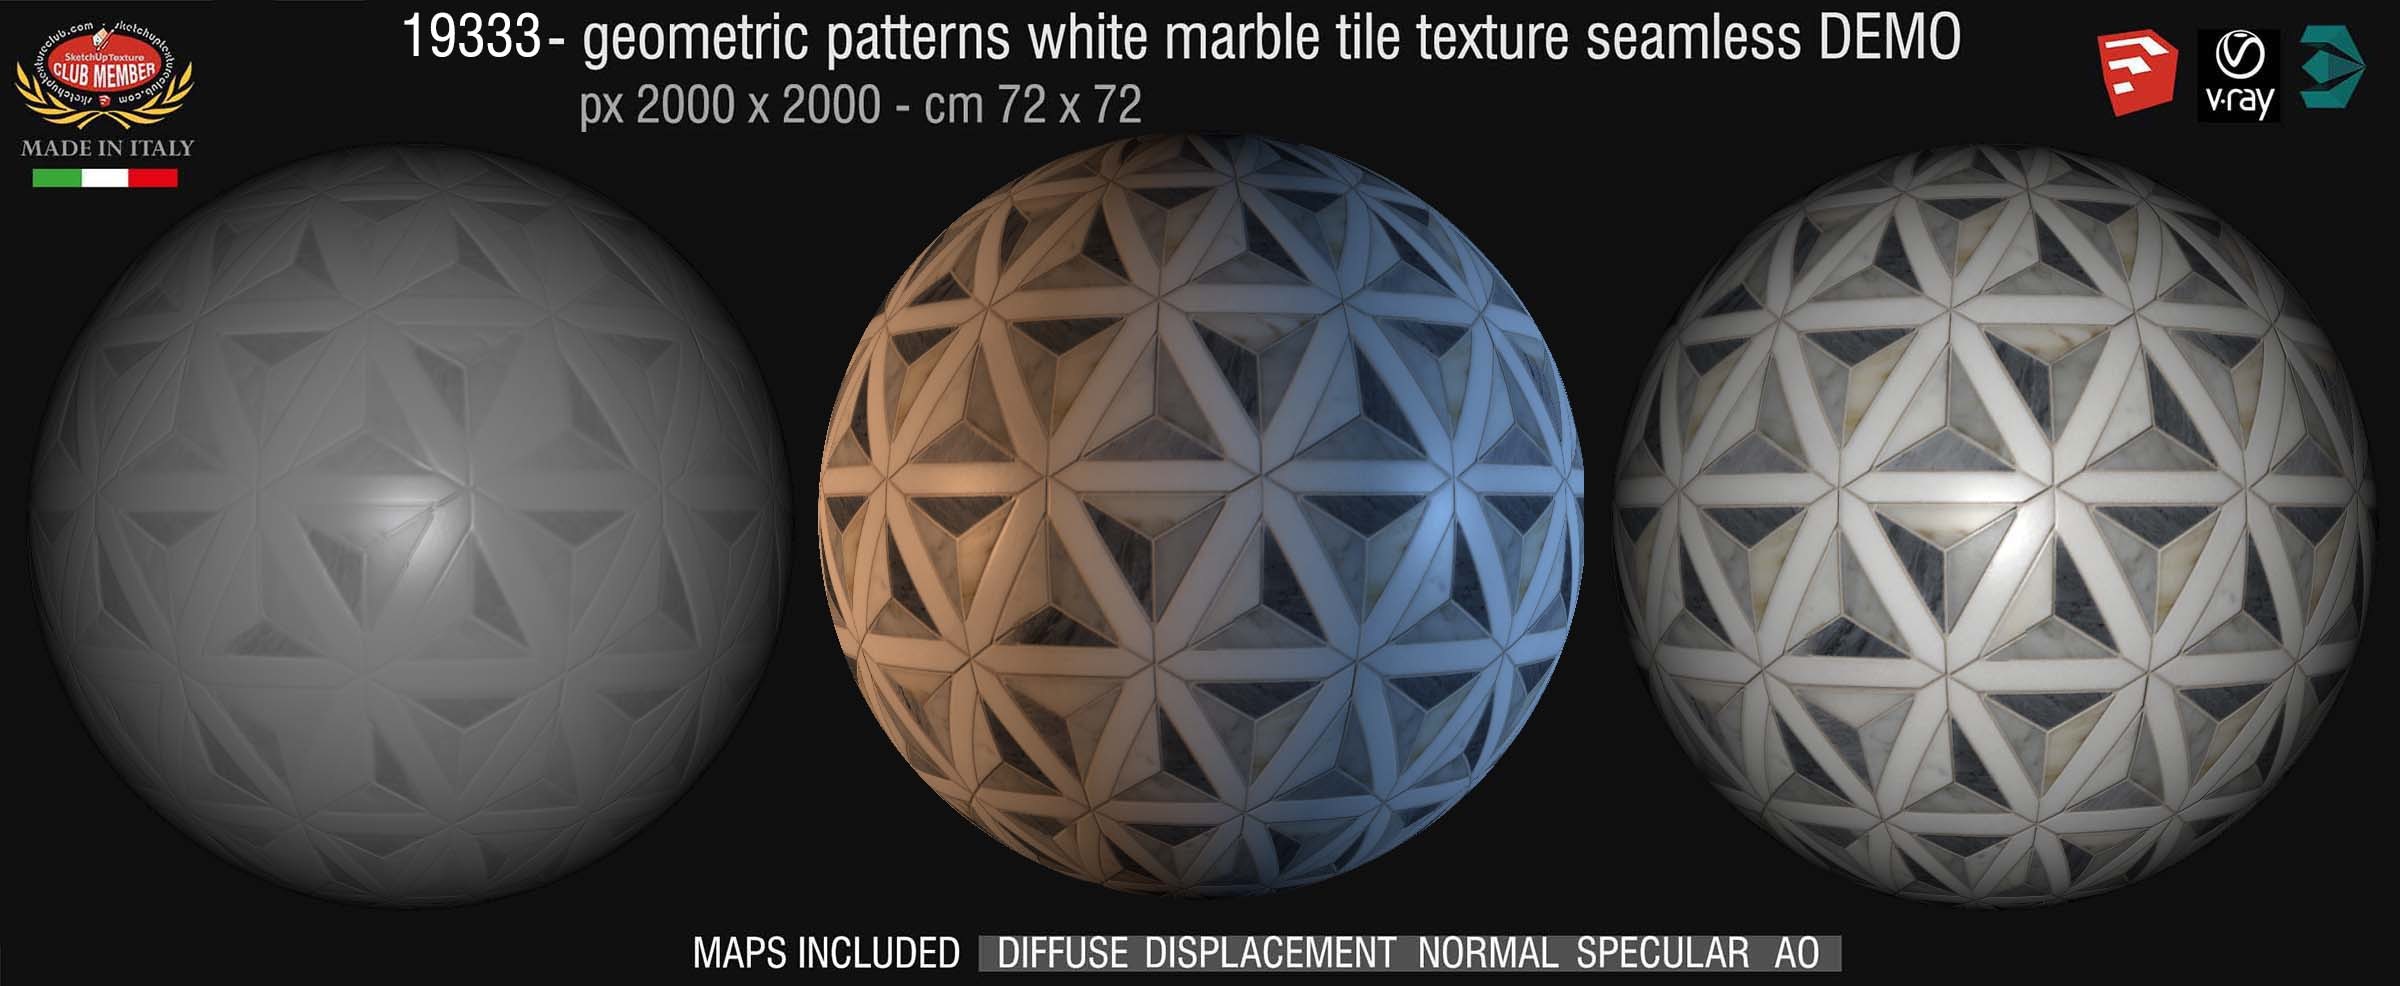 19333 Geometric pattern white marble floor tile texture seamless + maps DEMO